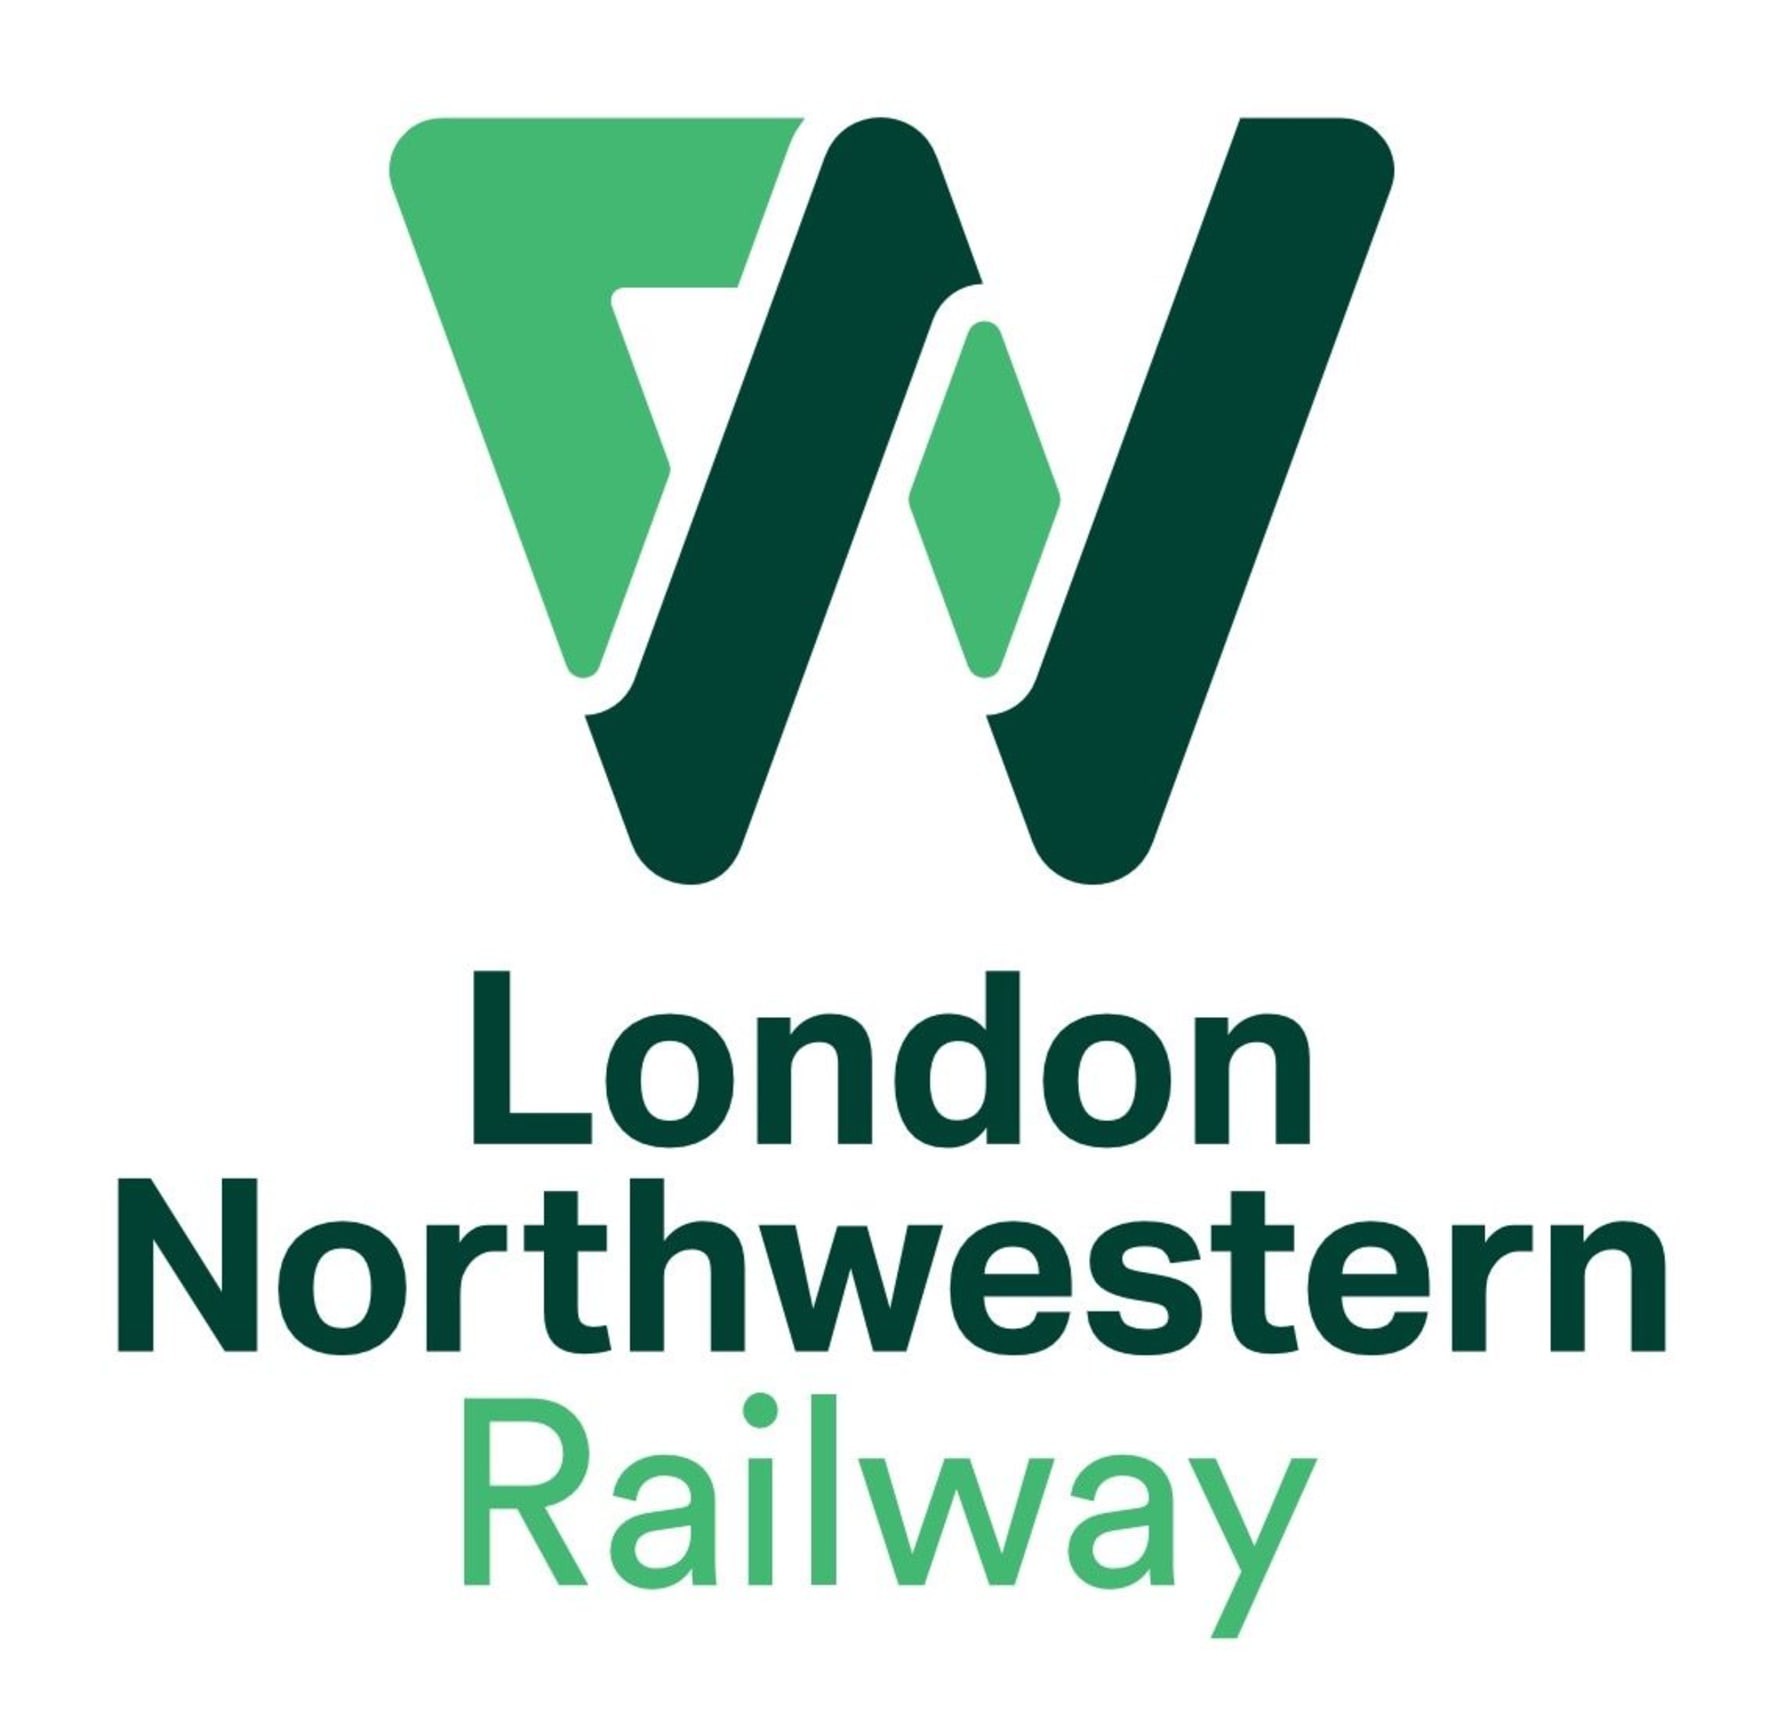 London Northwestern Railway running special timetable on Sunday